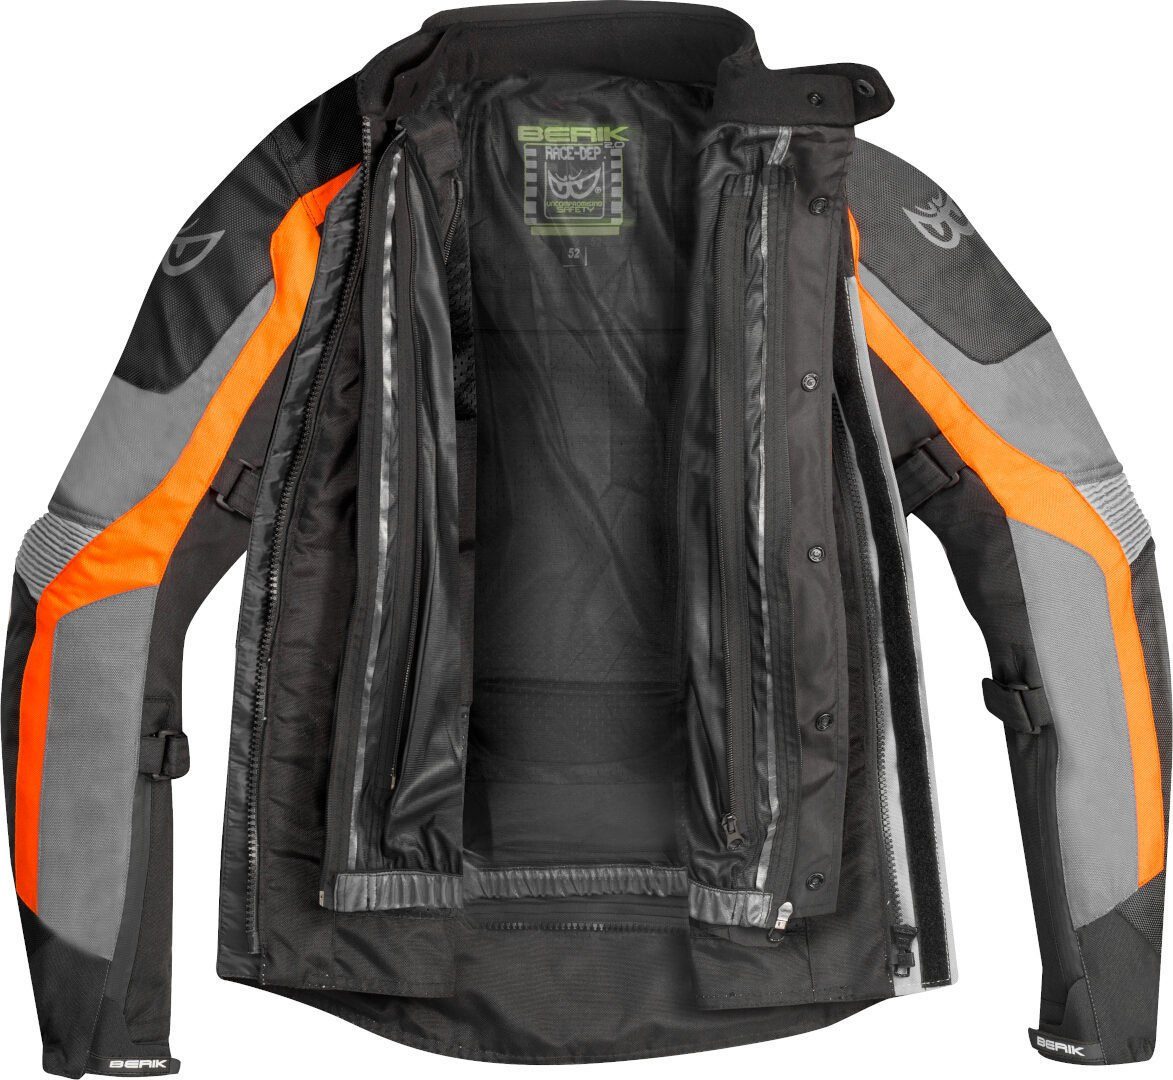 Black/Grey/Orange Motorradjacke Safari Berik Motorrad 3in1 wasserdichte Textiljacke